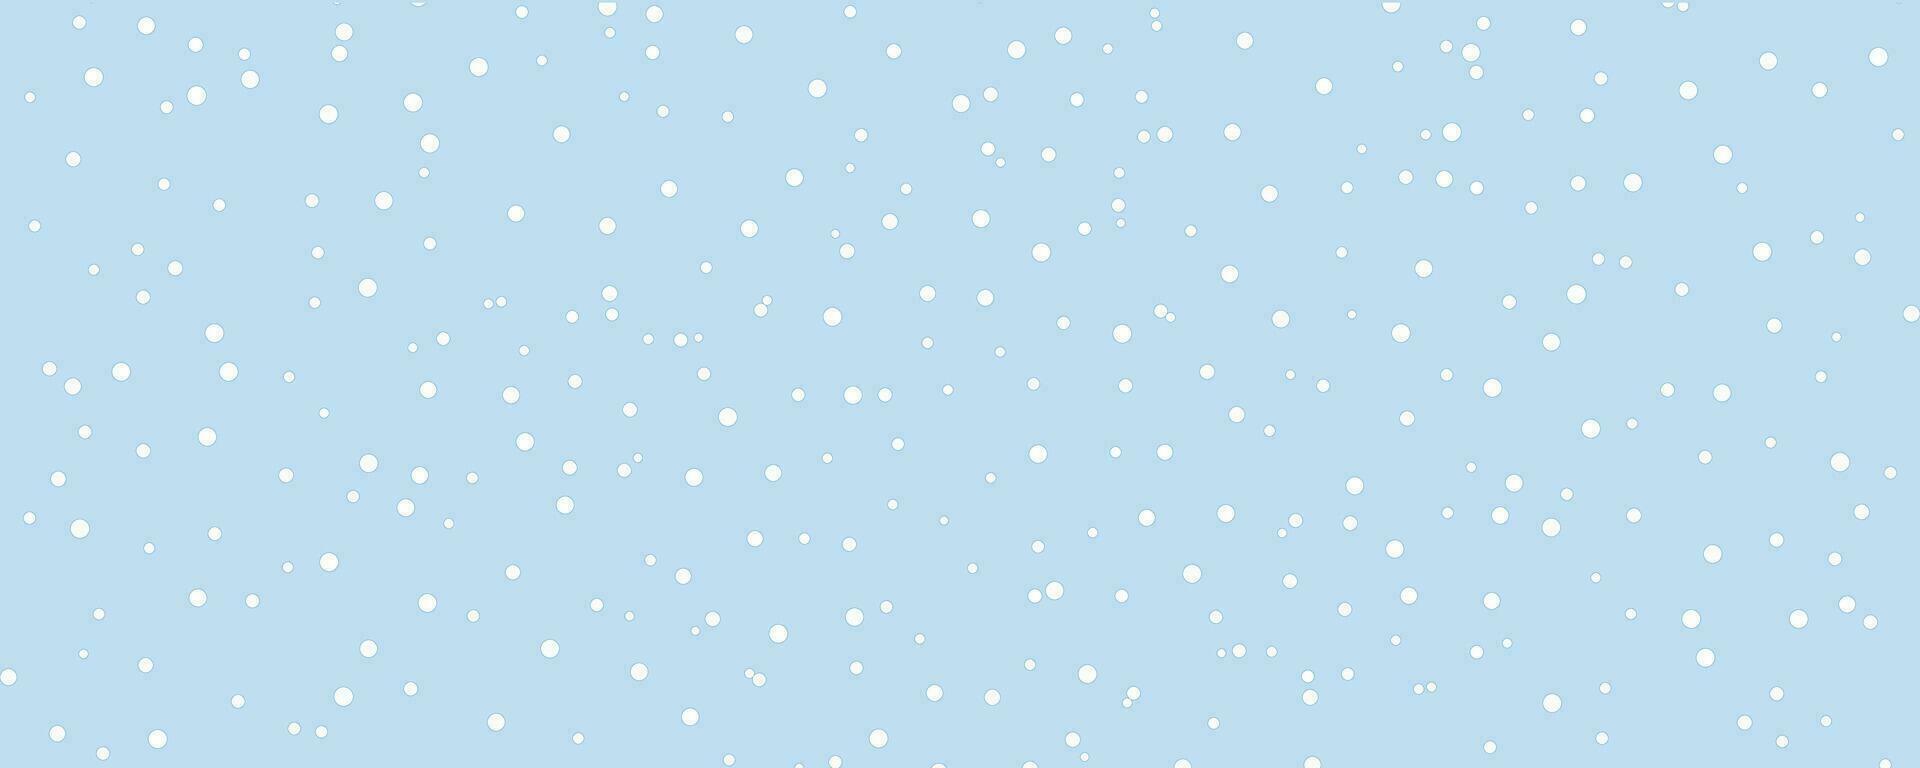 White snow falling on sky blue. vector